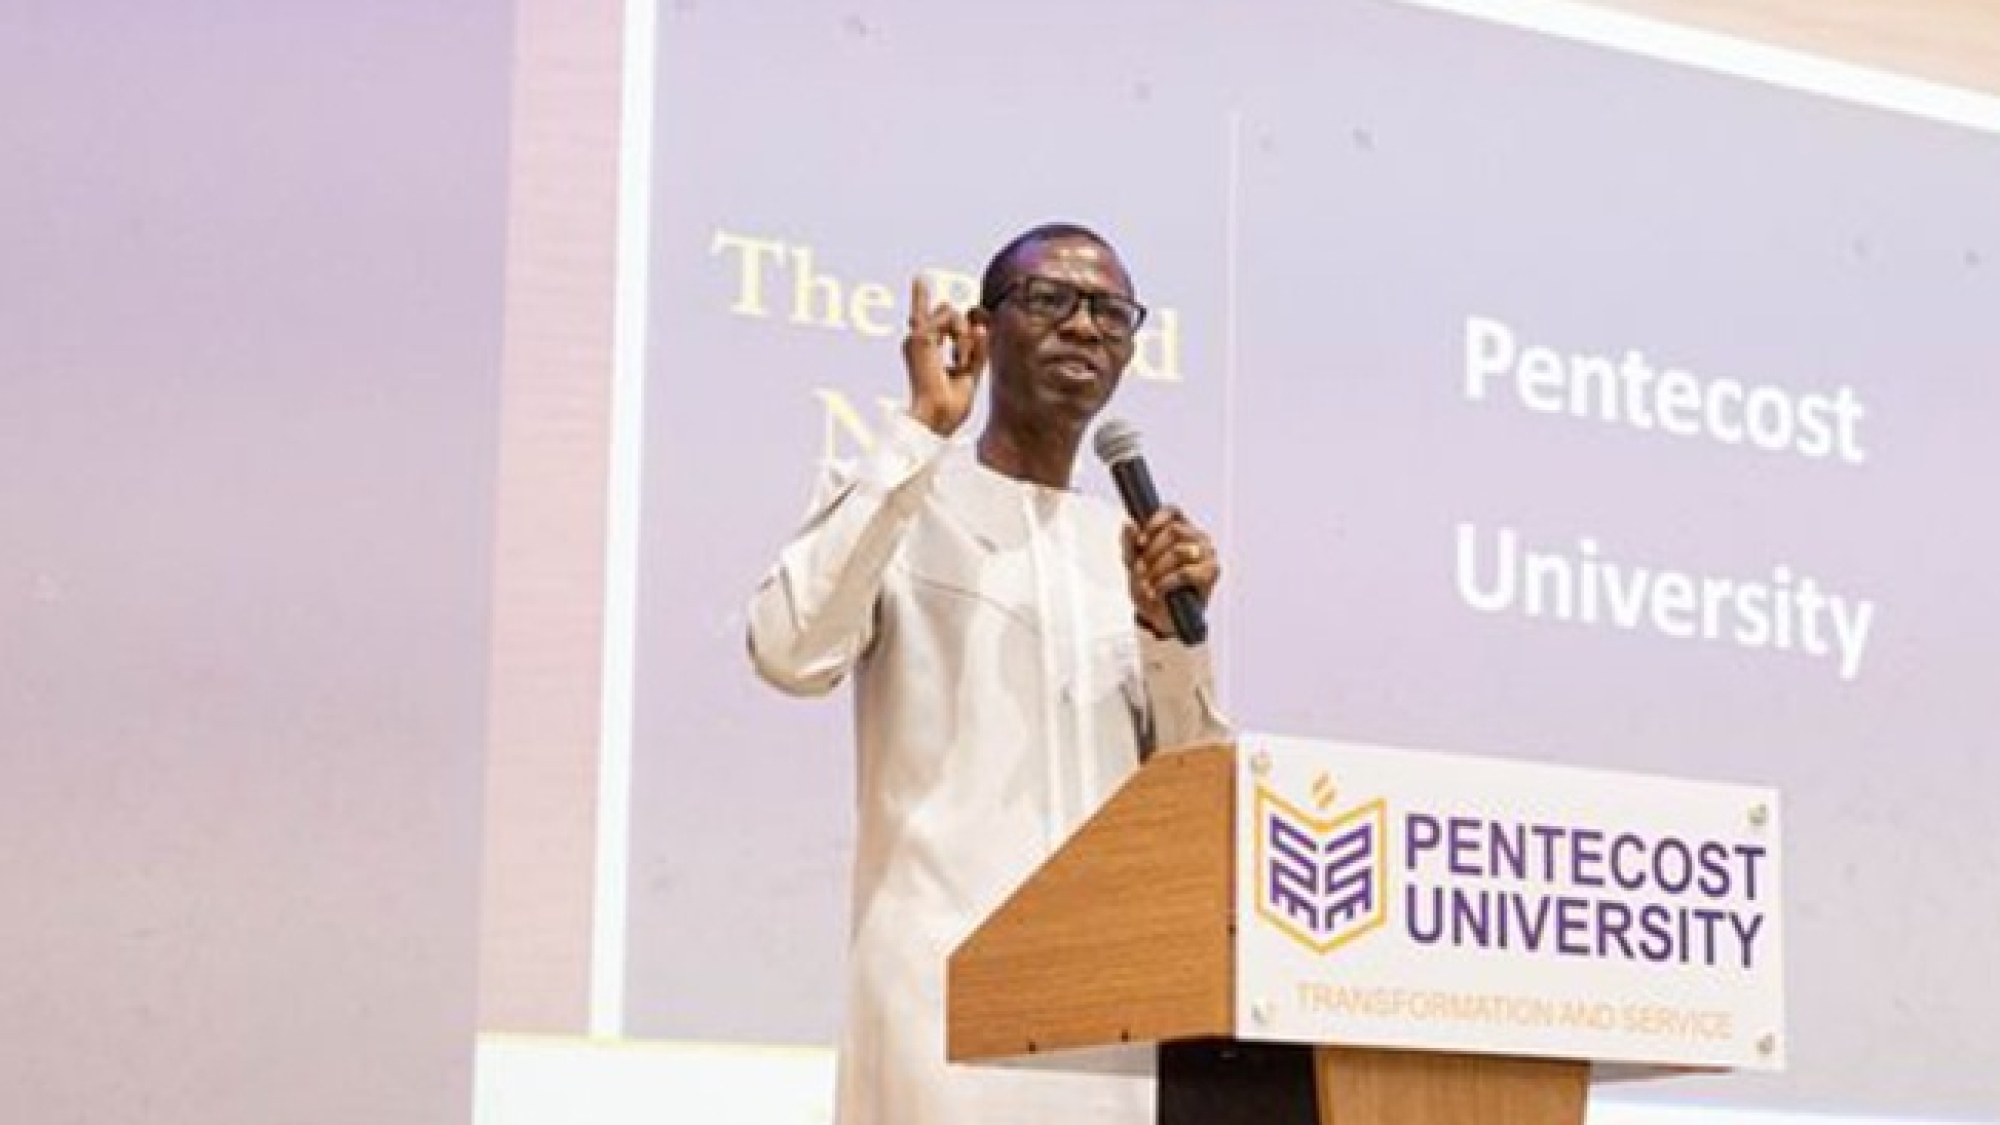 The “Pentecost University brand web